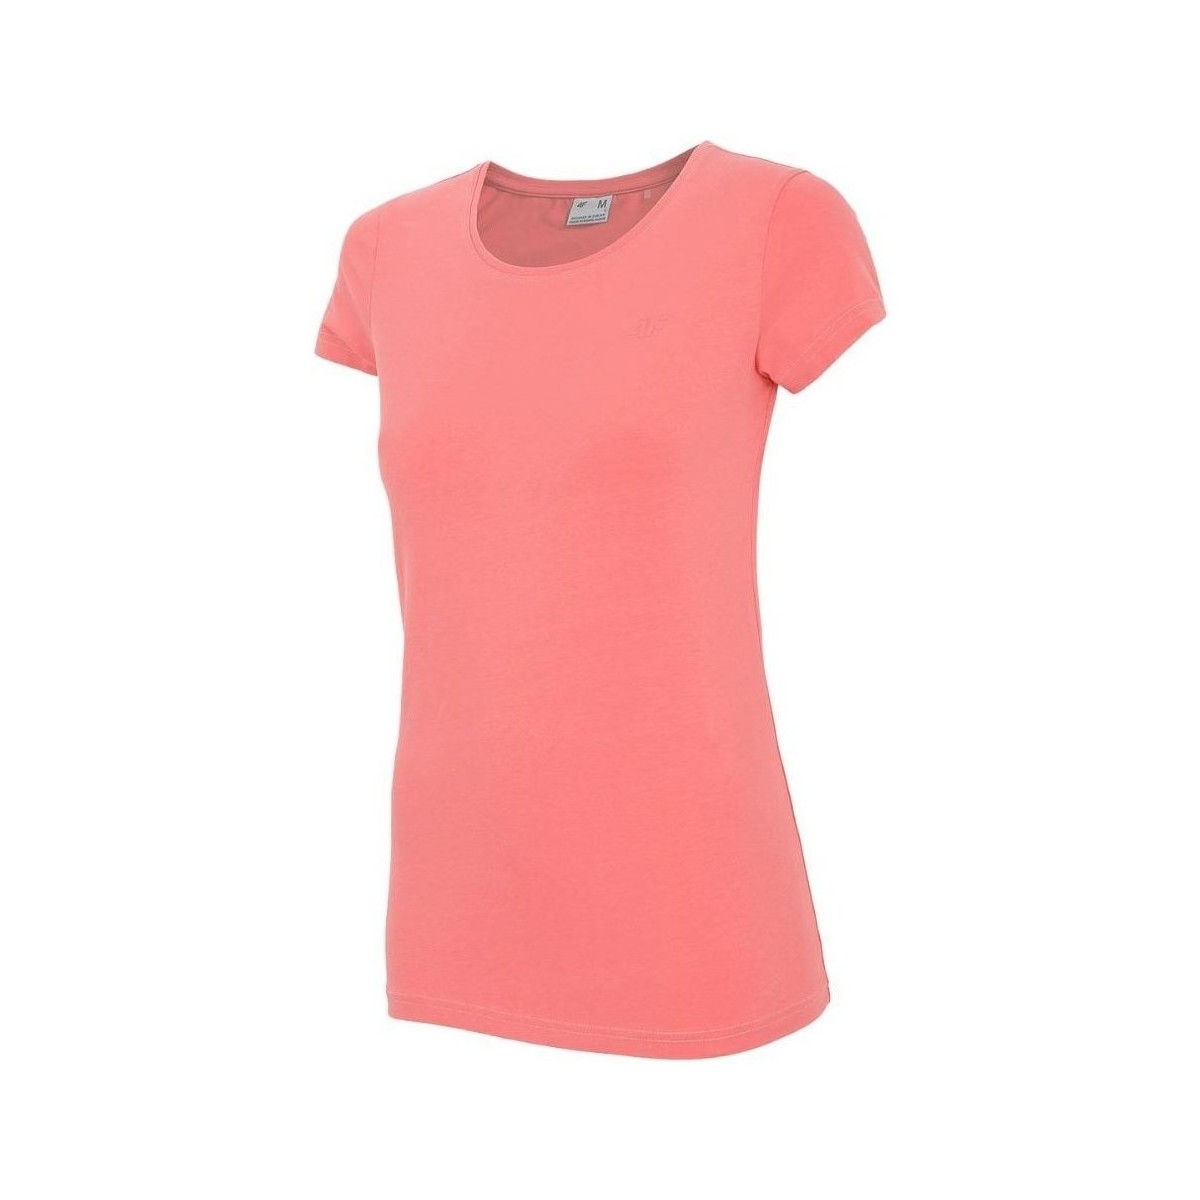 Vêtements Femme T-shirts manches courtes 4F TSD350 Rose